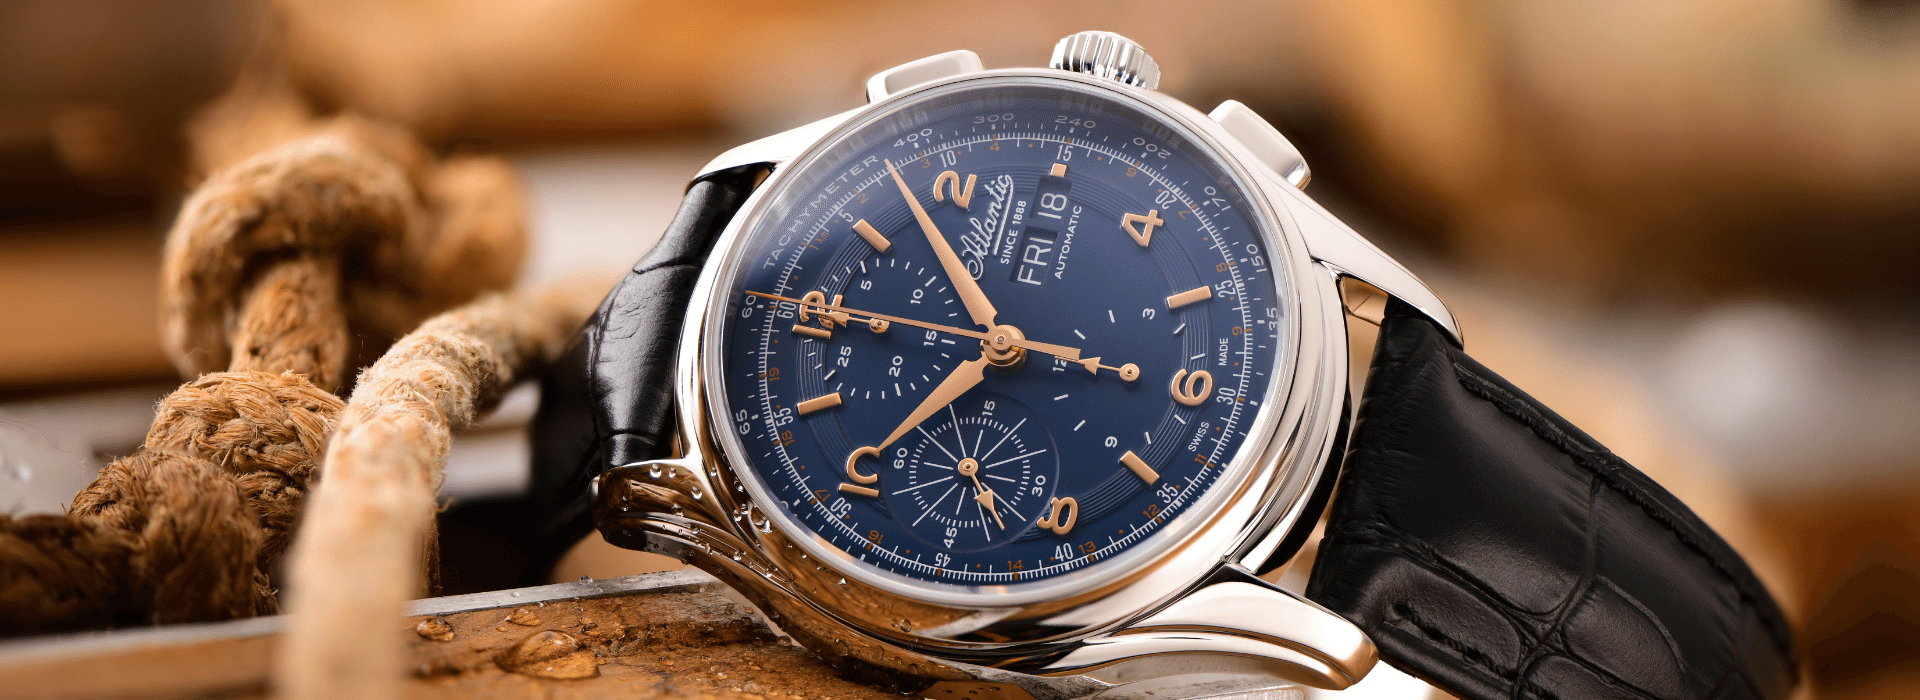 Atlantic Watches Since 1888 - Worldmaster Day Date